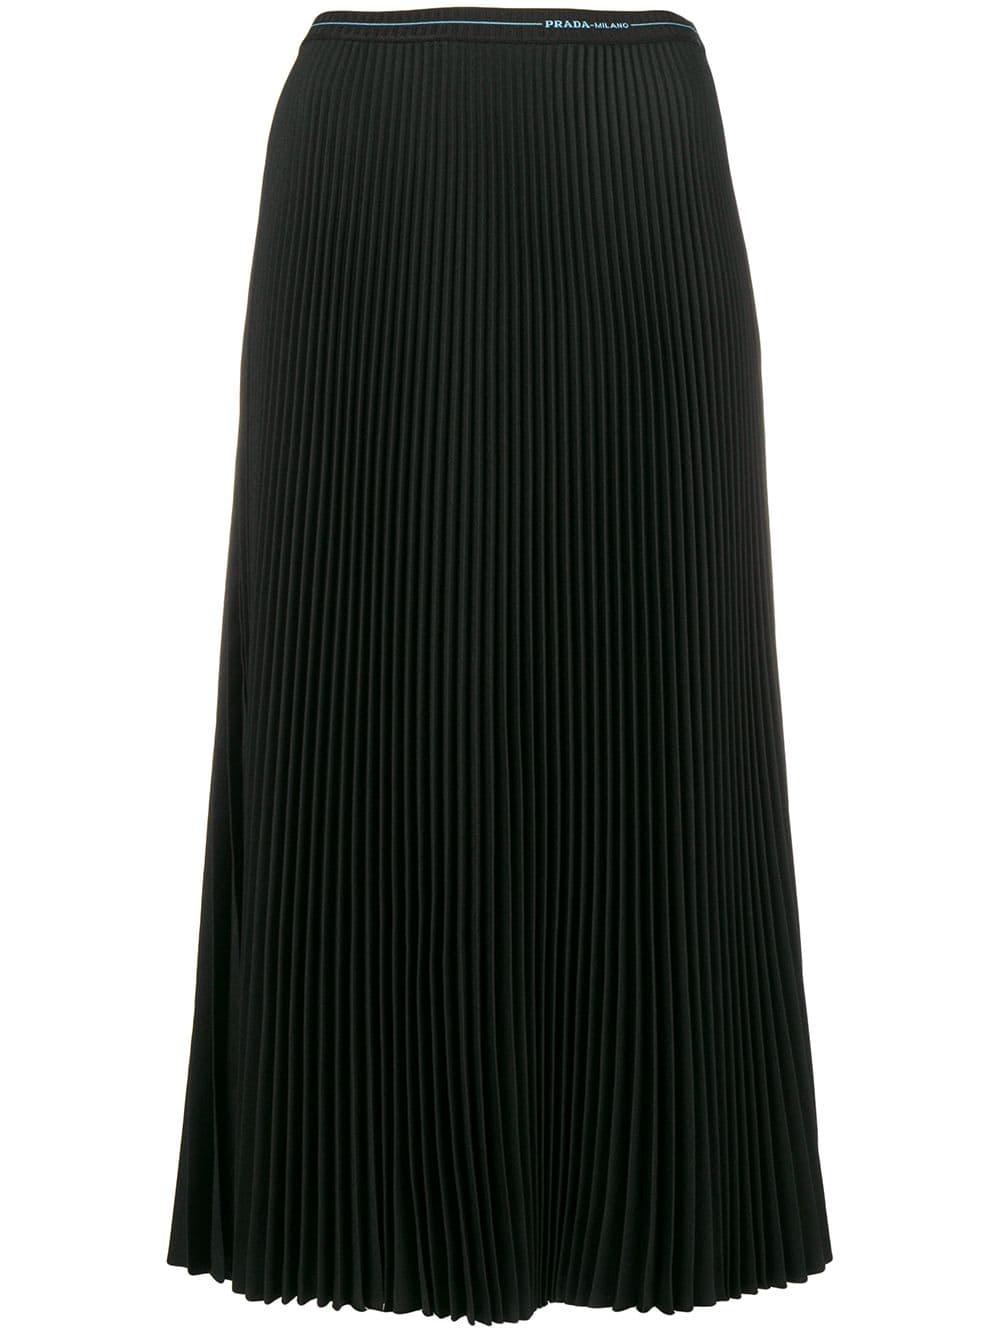 Prada Pleated Midi Skirt in Black - Lyst